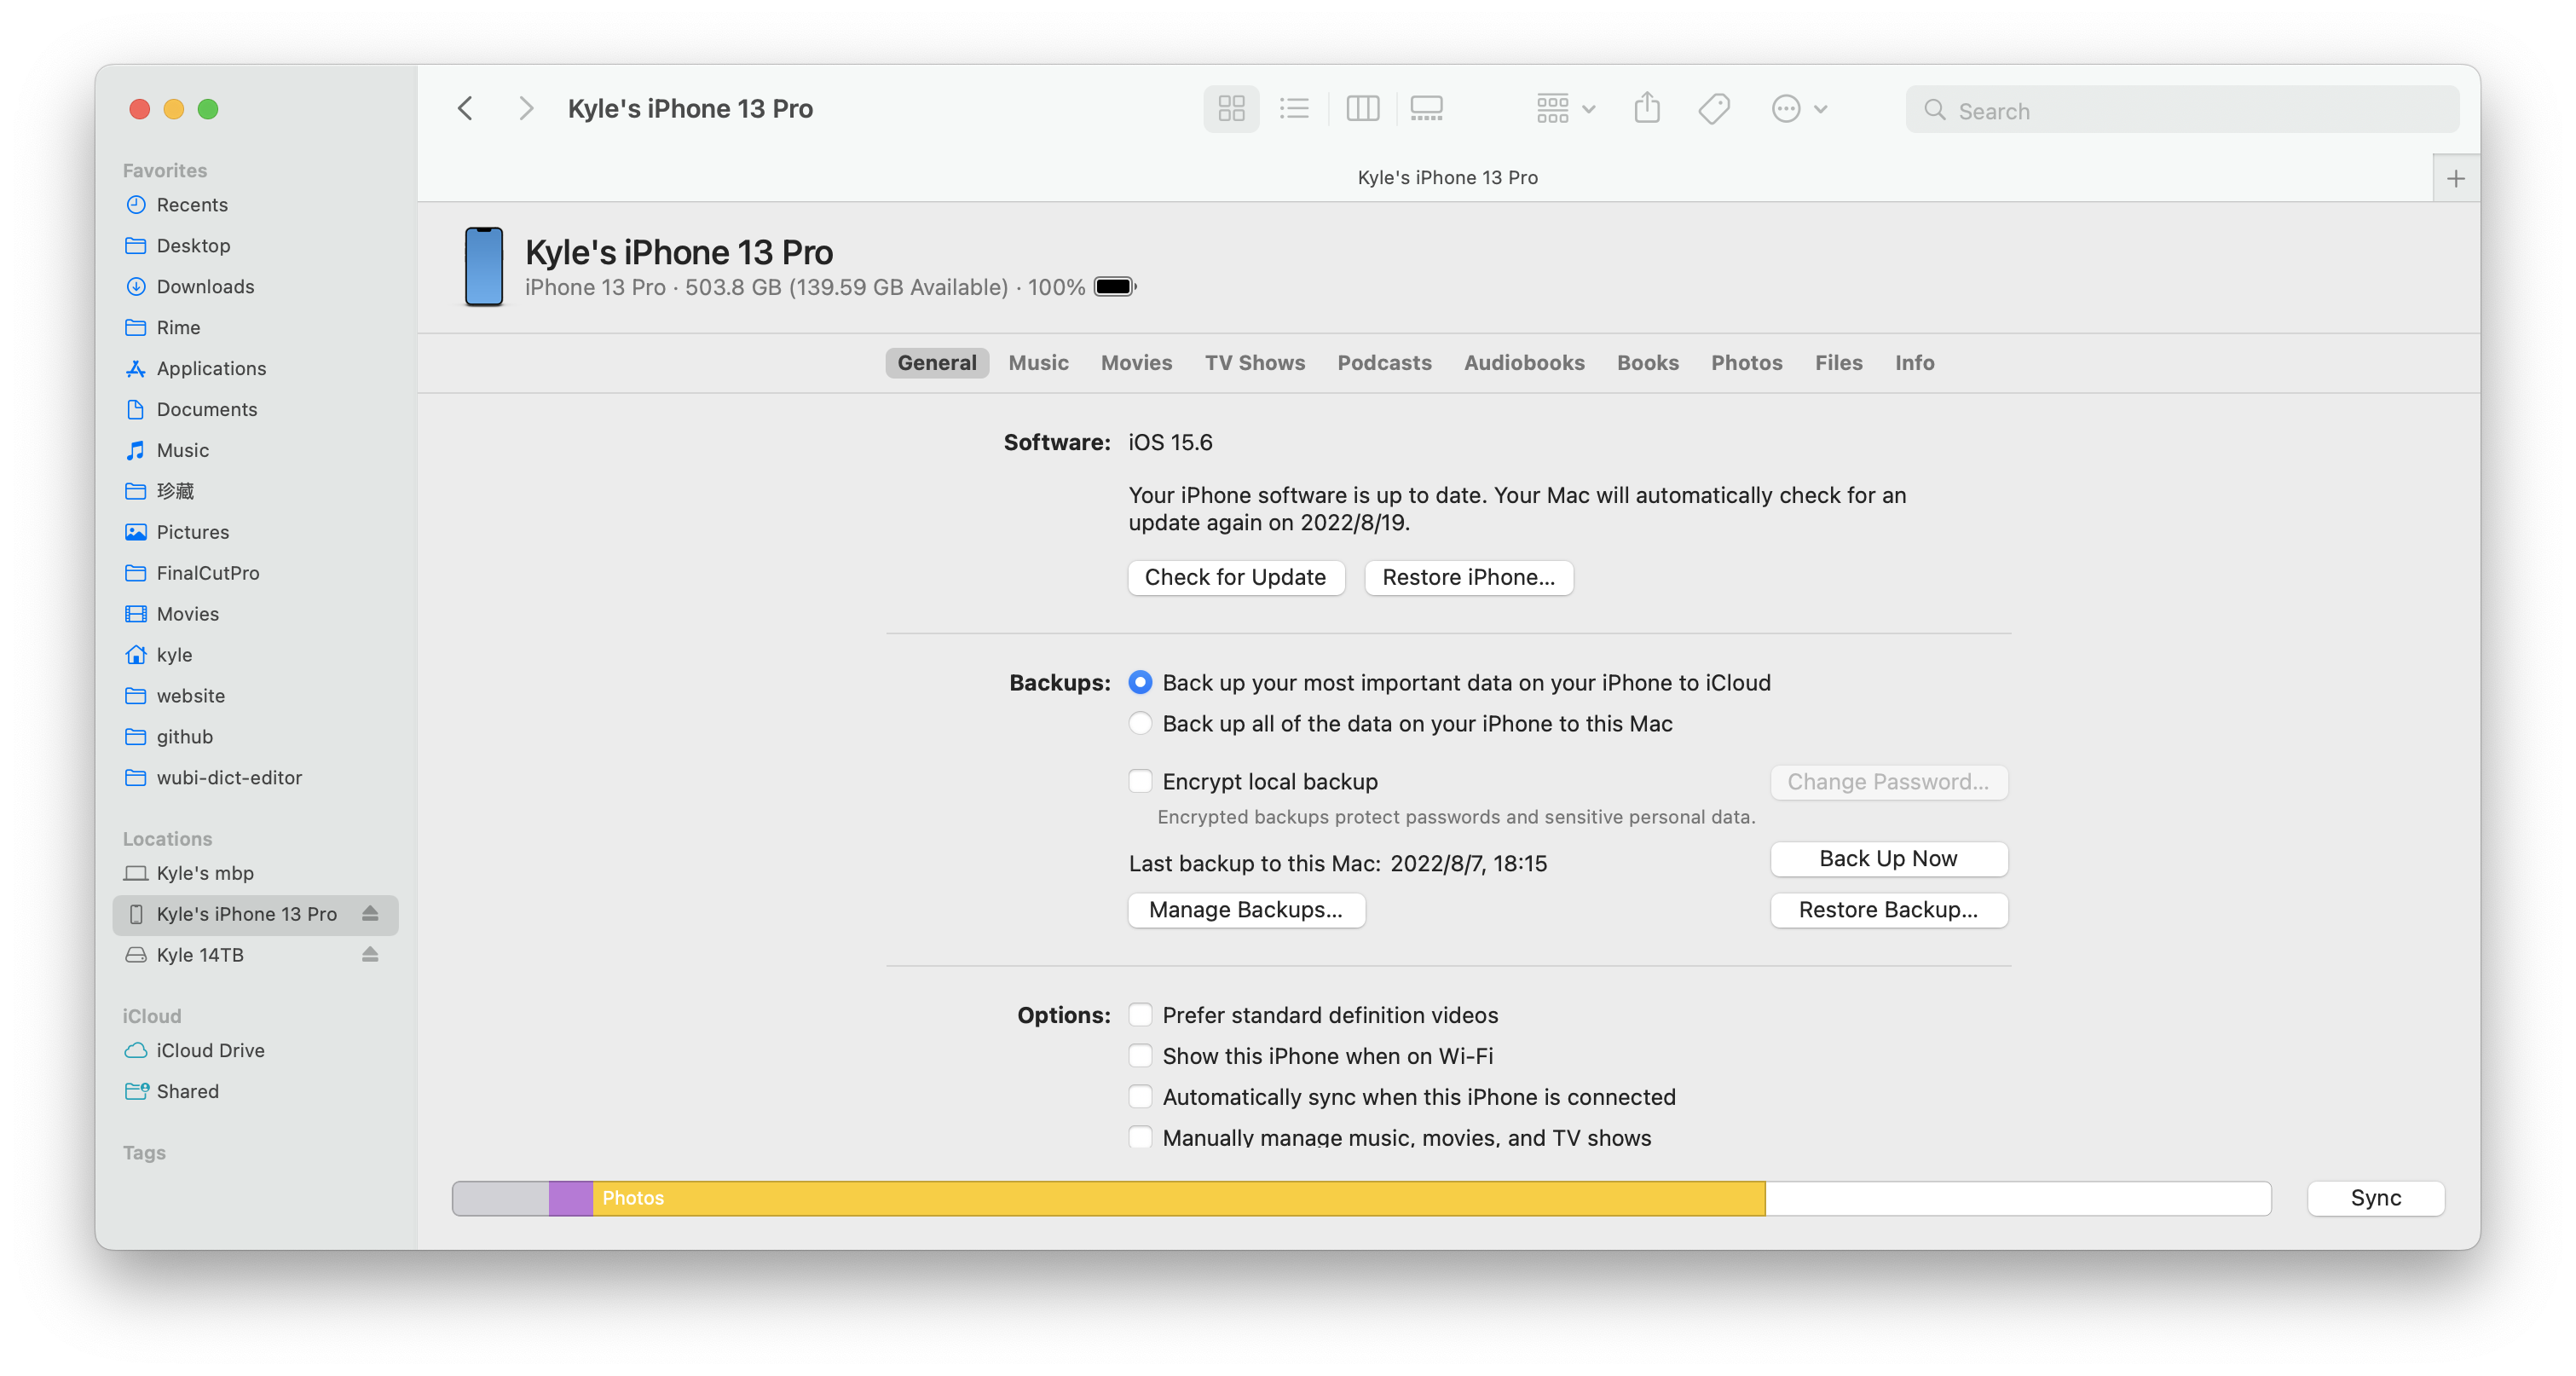 Mac 如何使用外部存储设备，移动硬盘备份 iPhone 数据